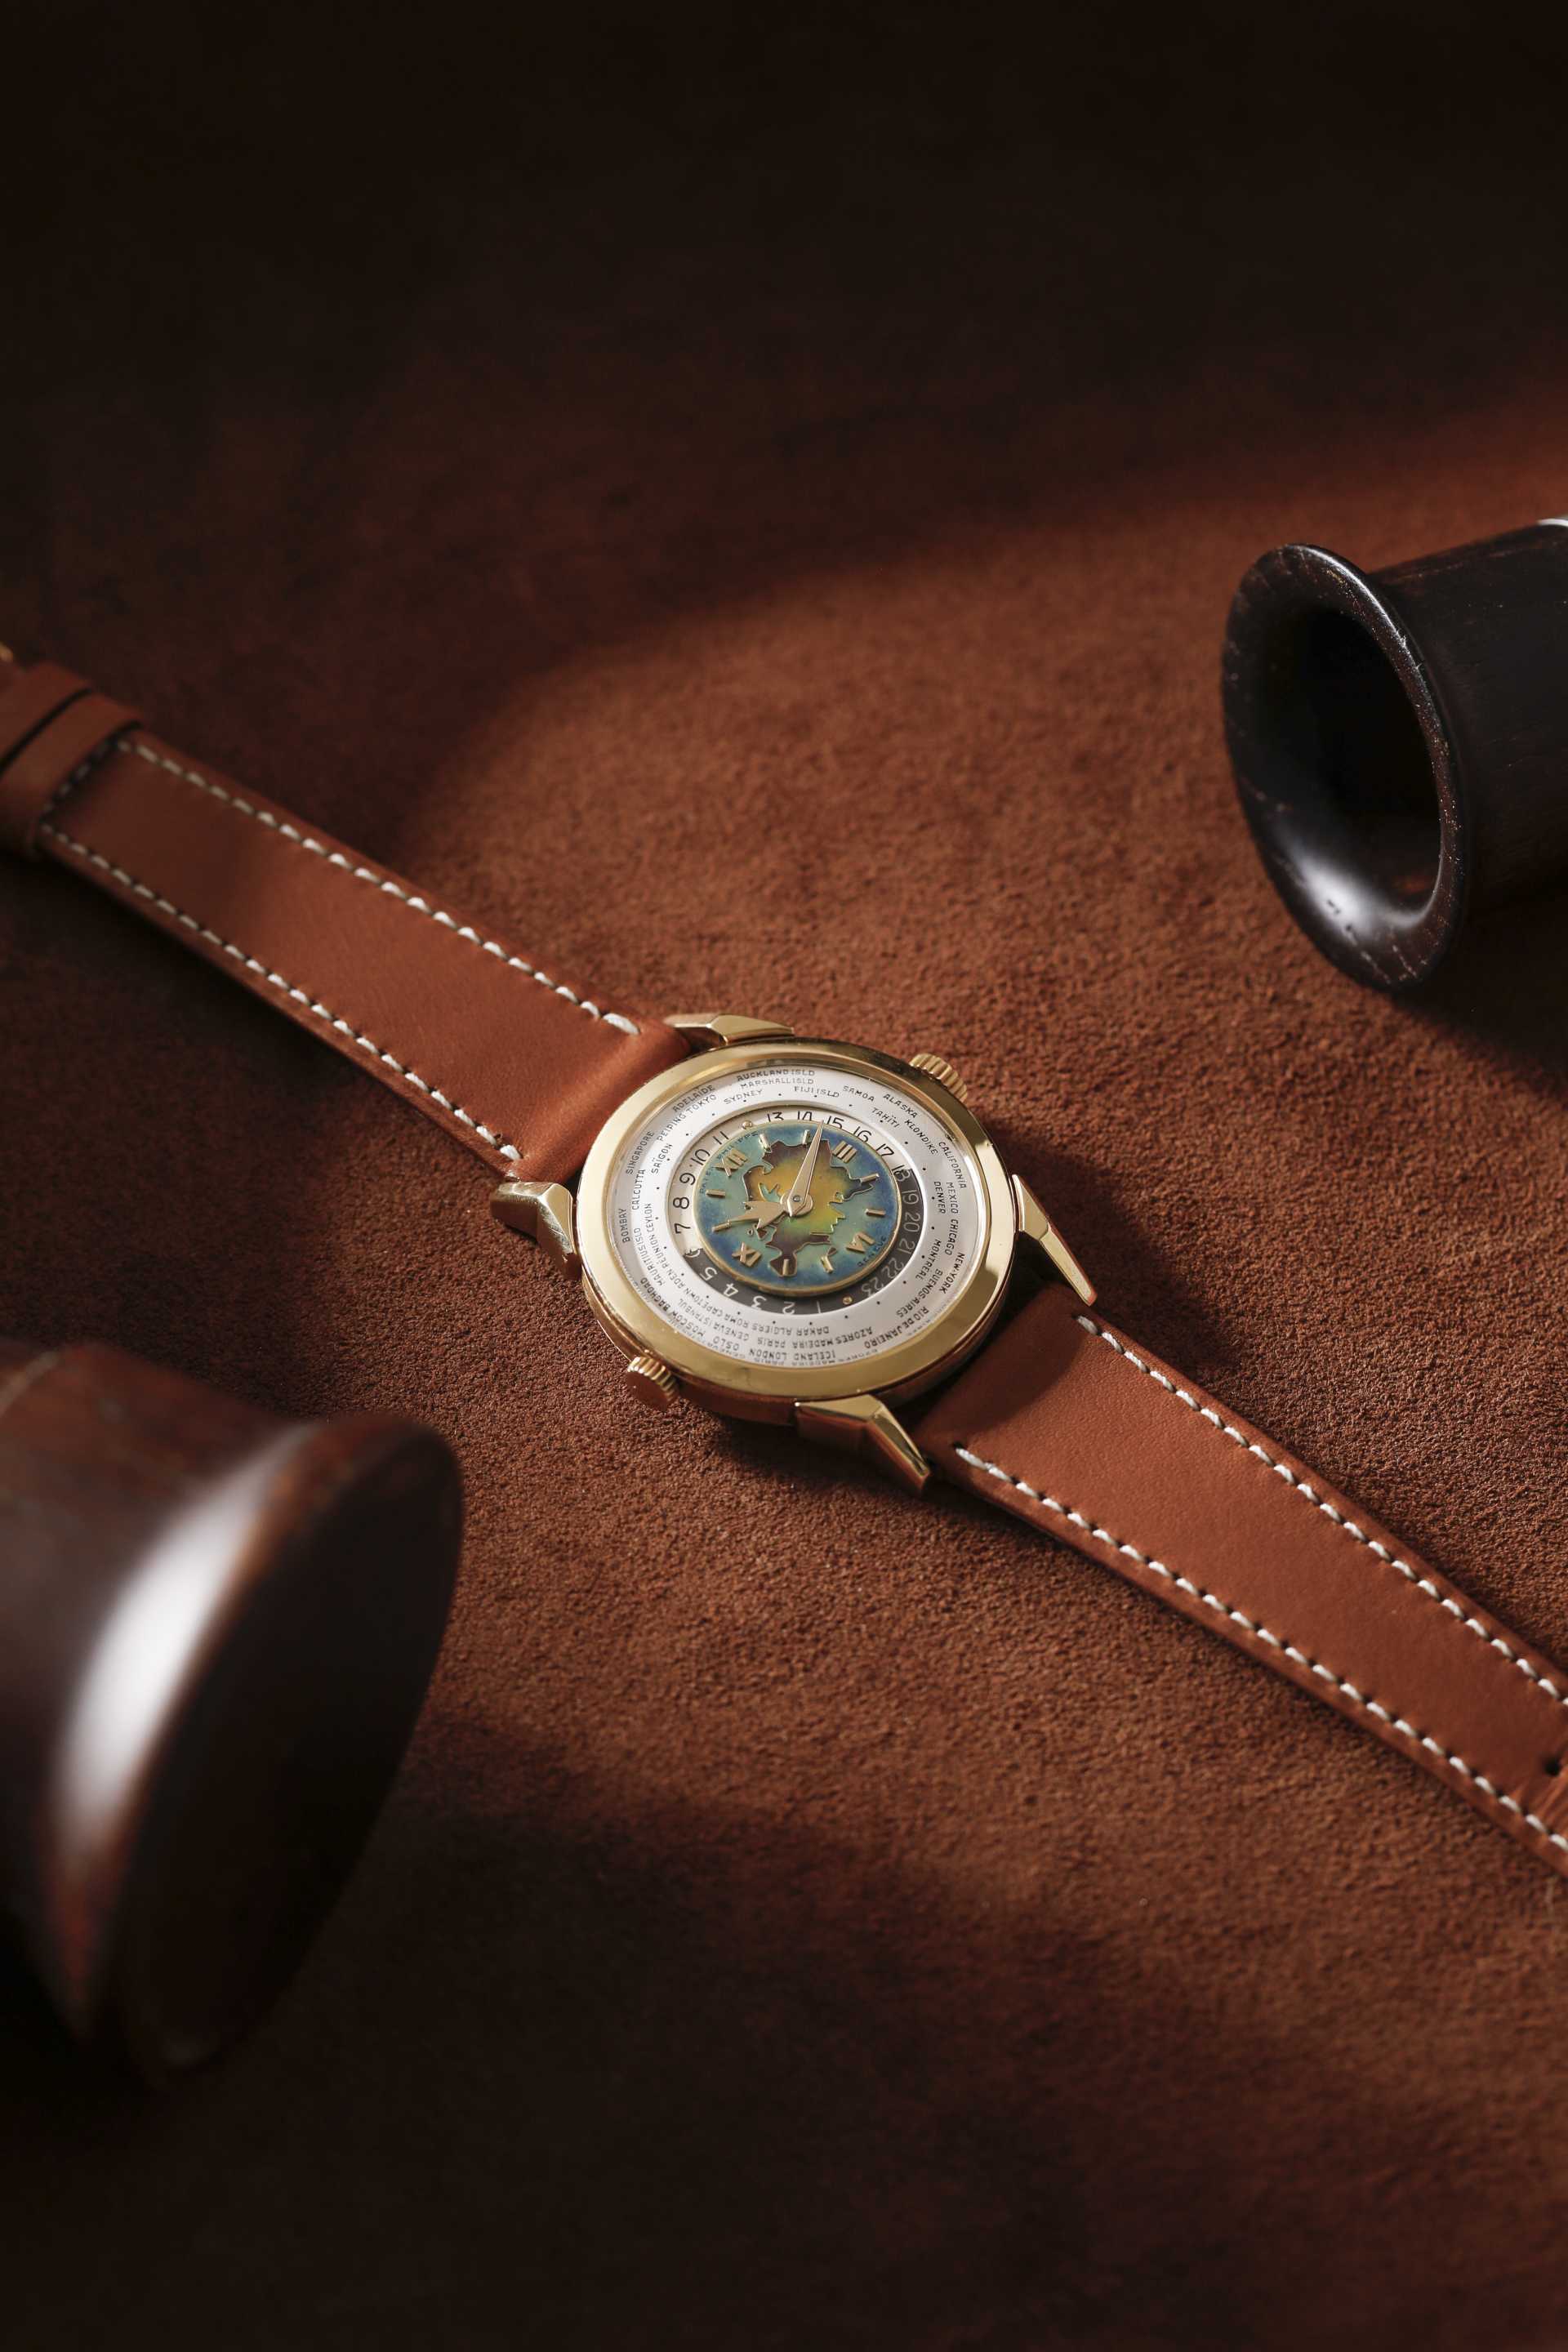 Patek Philippe Ref. 2523 “Eurasia Dial” watch